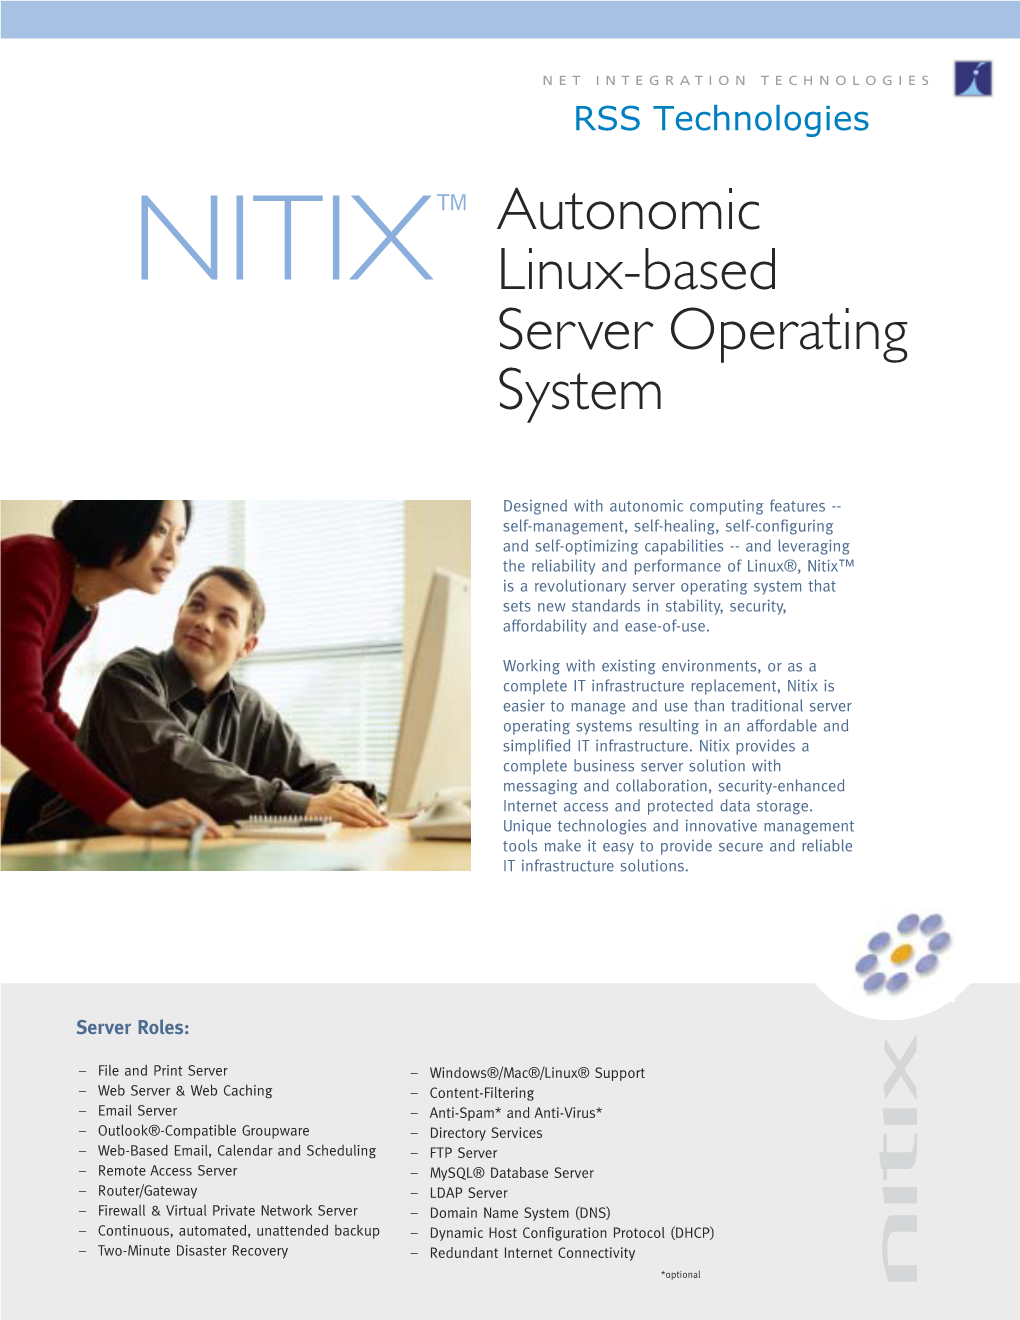 Autonomic Linux-Based Server Operating System